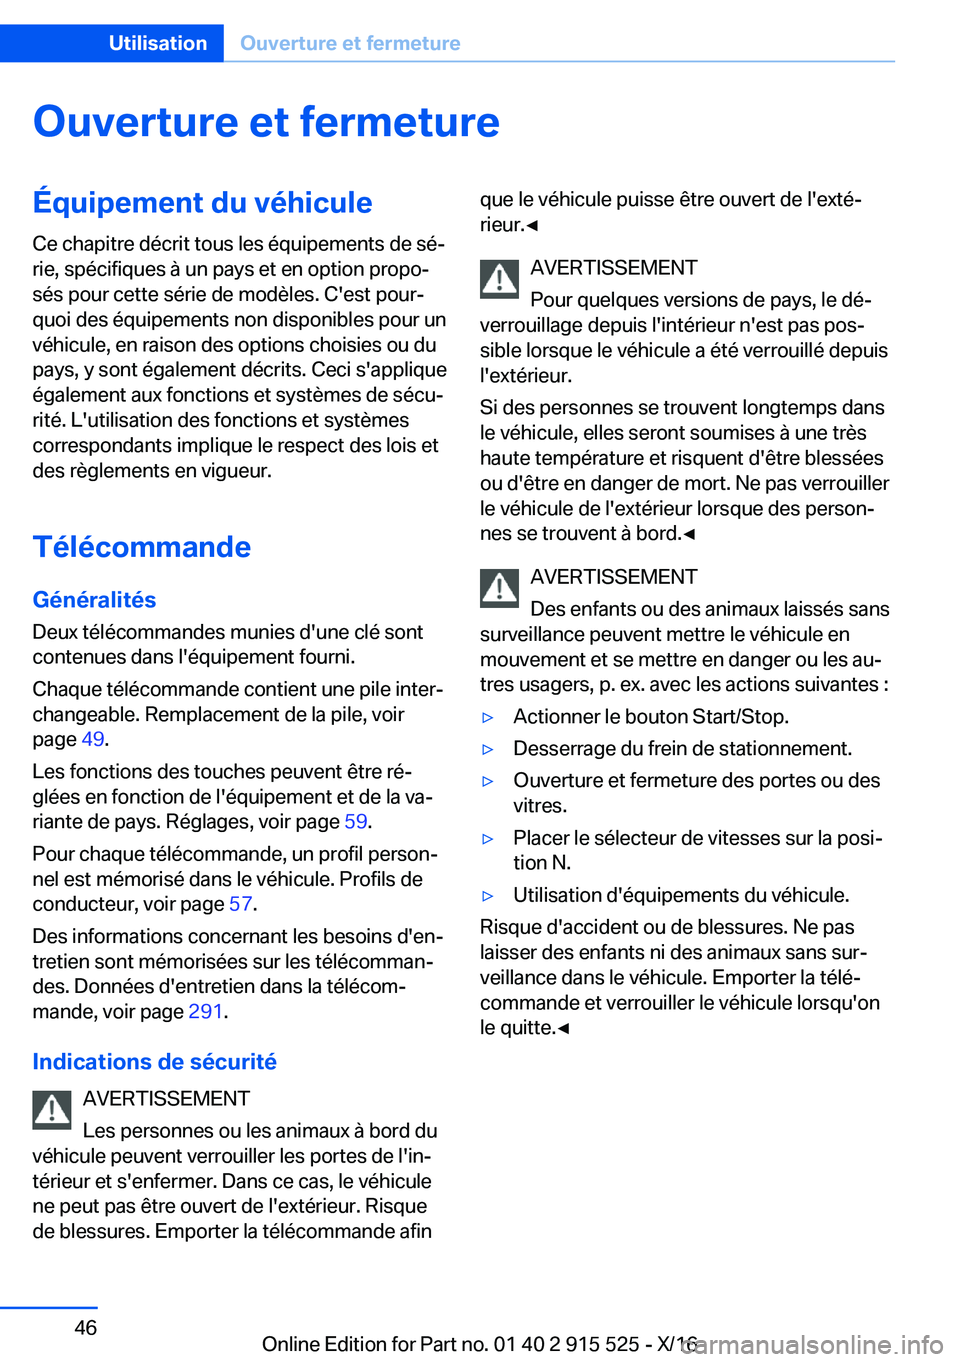 BMW X5 2017  Notices Demploi (in French) �O�u�v�e�r�t�u�r�e��e�t��f�e�r�m�e�t�u�r�e�